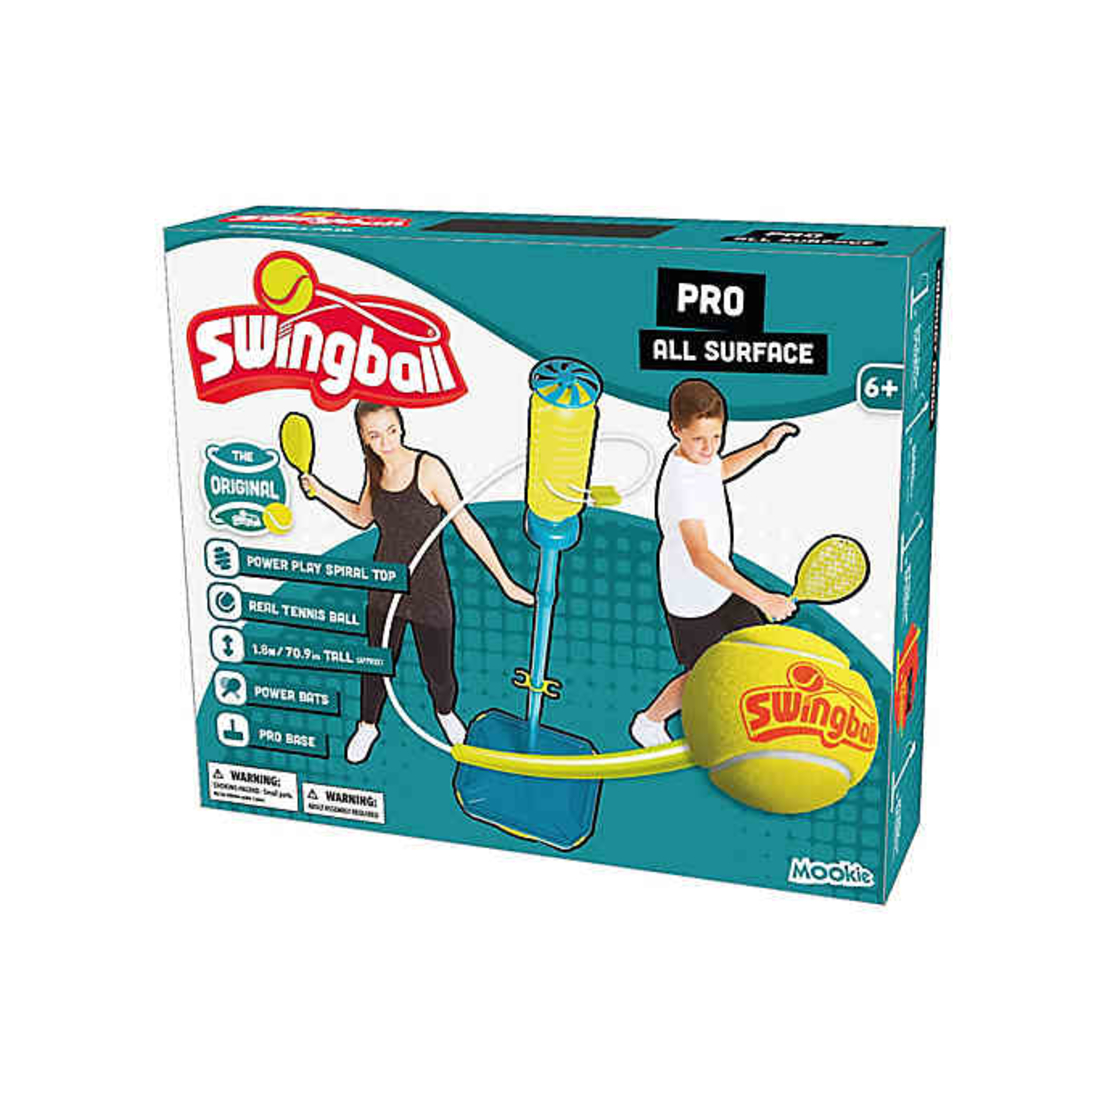 Swingball All Surface Pro set